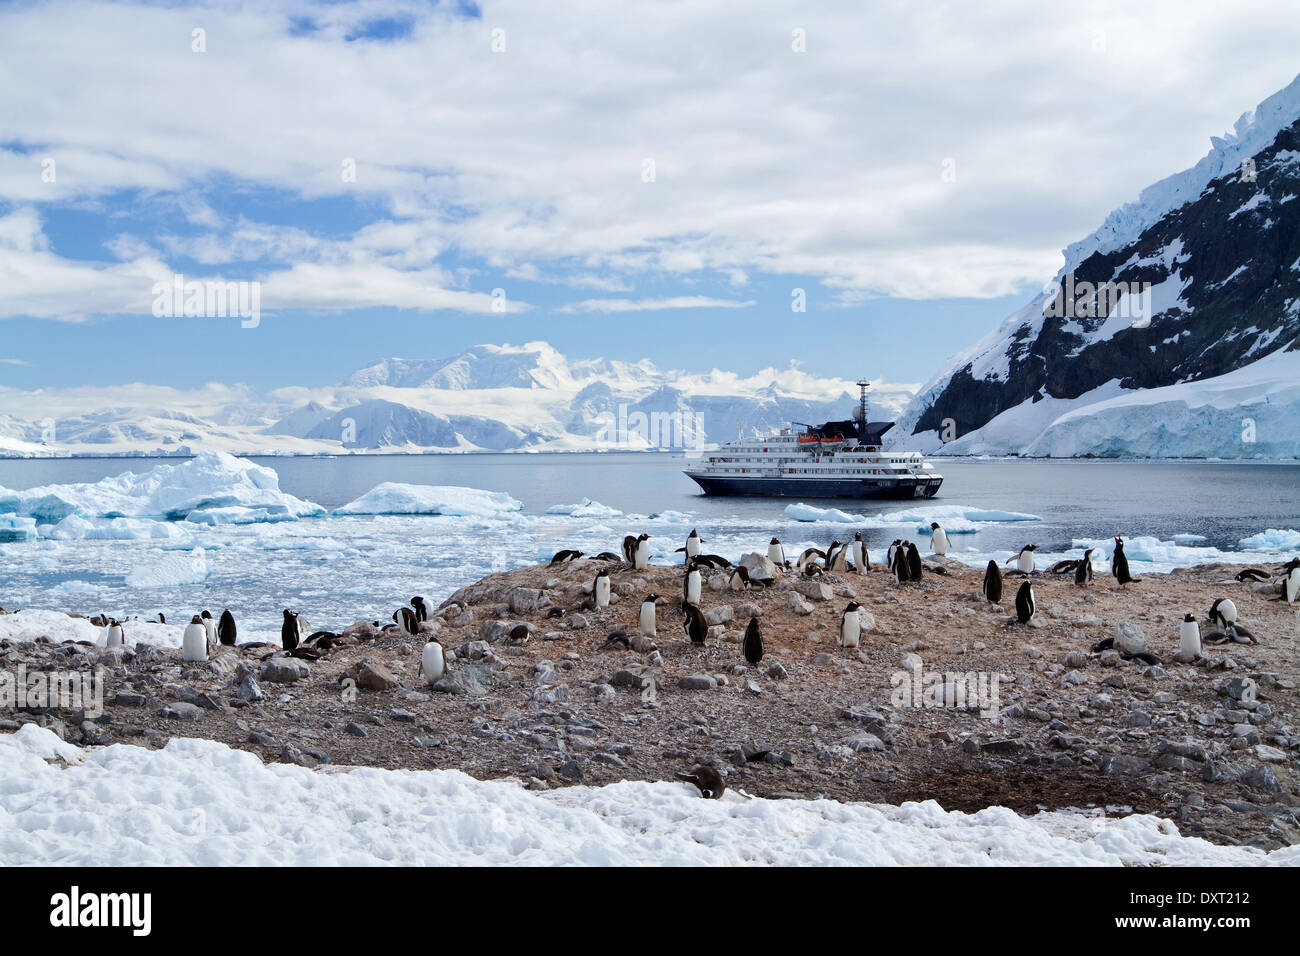 Cruise ship Antarctica expedition with tourist enjoy Antarctic landscape of penguins, mountains, Neko Harbor, Harbour. Stock Photo